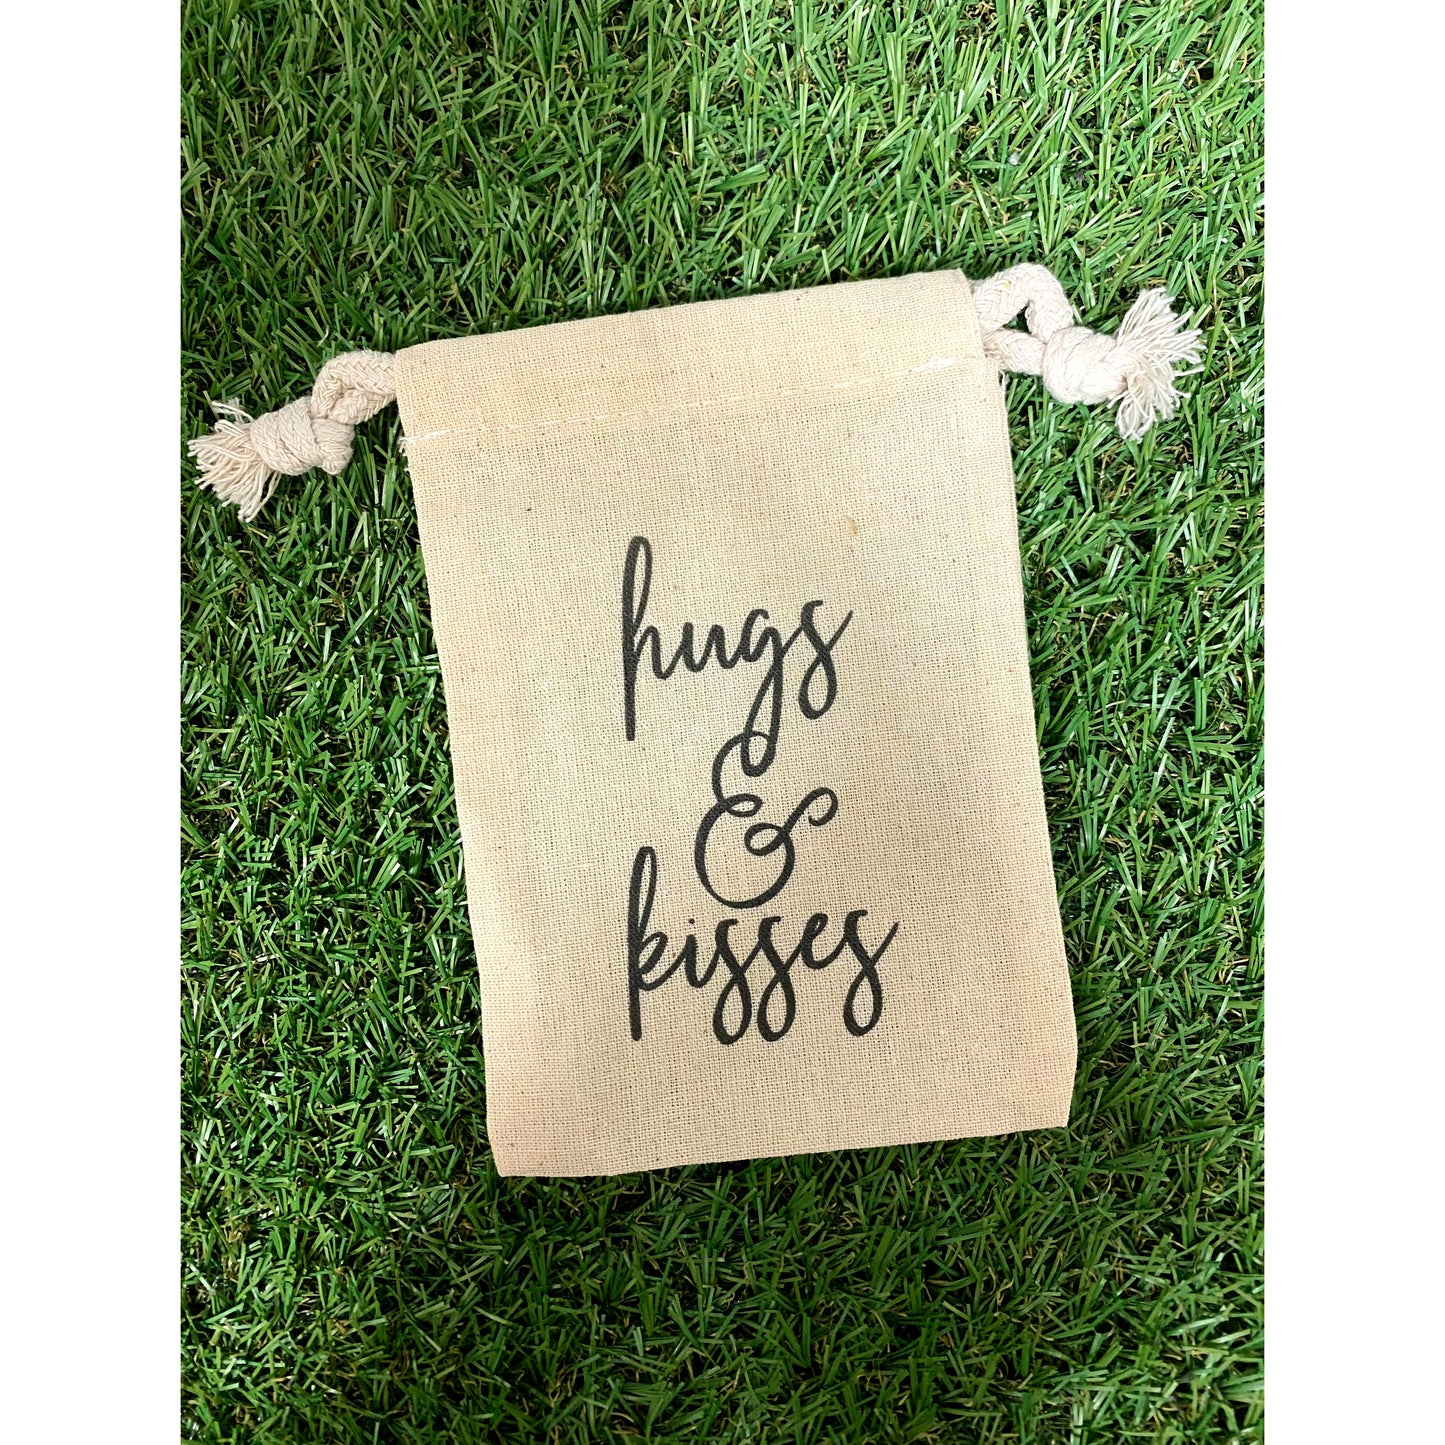 Treat/Gift Drawstring Bag, Hugs & Kisses